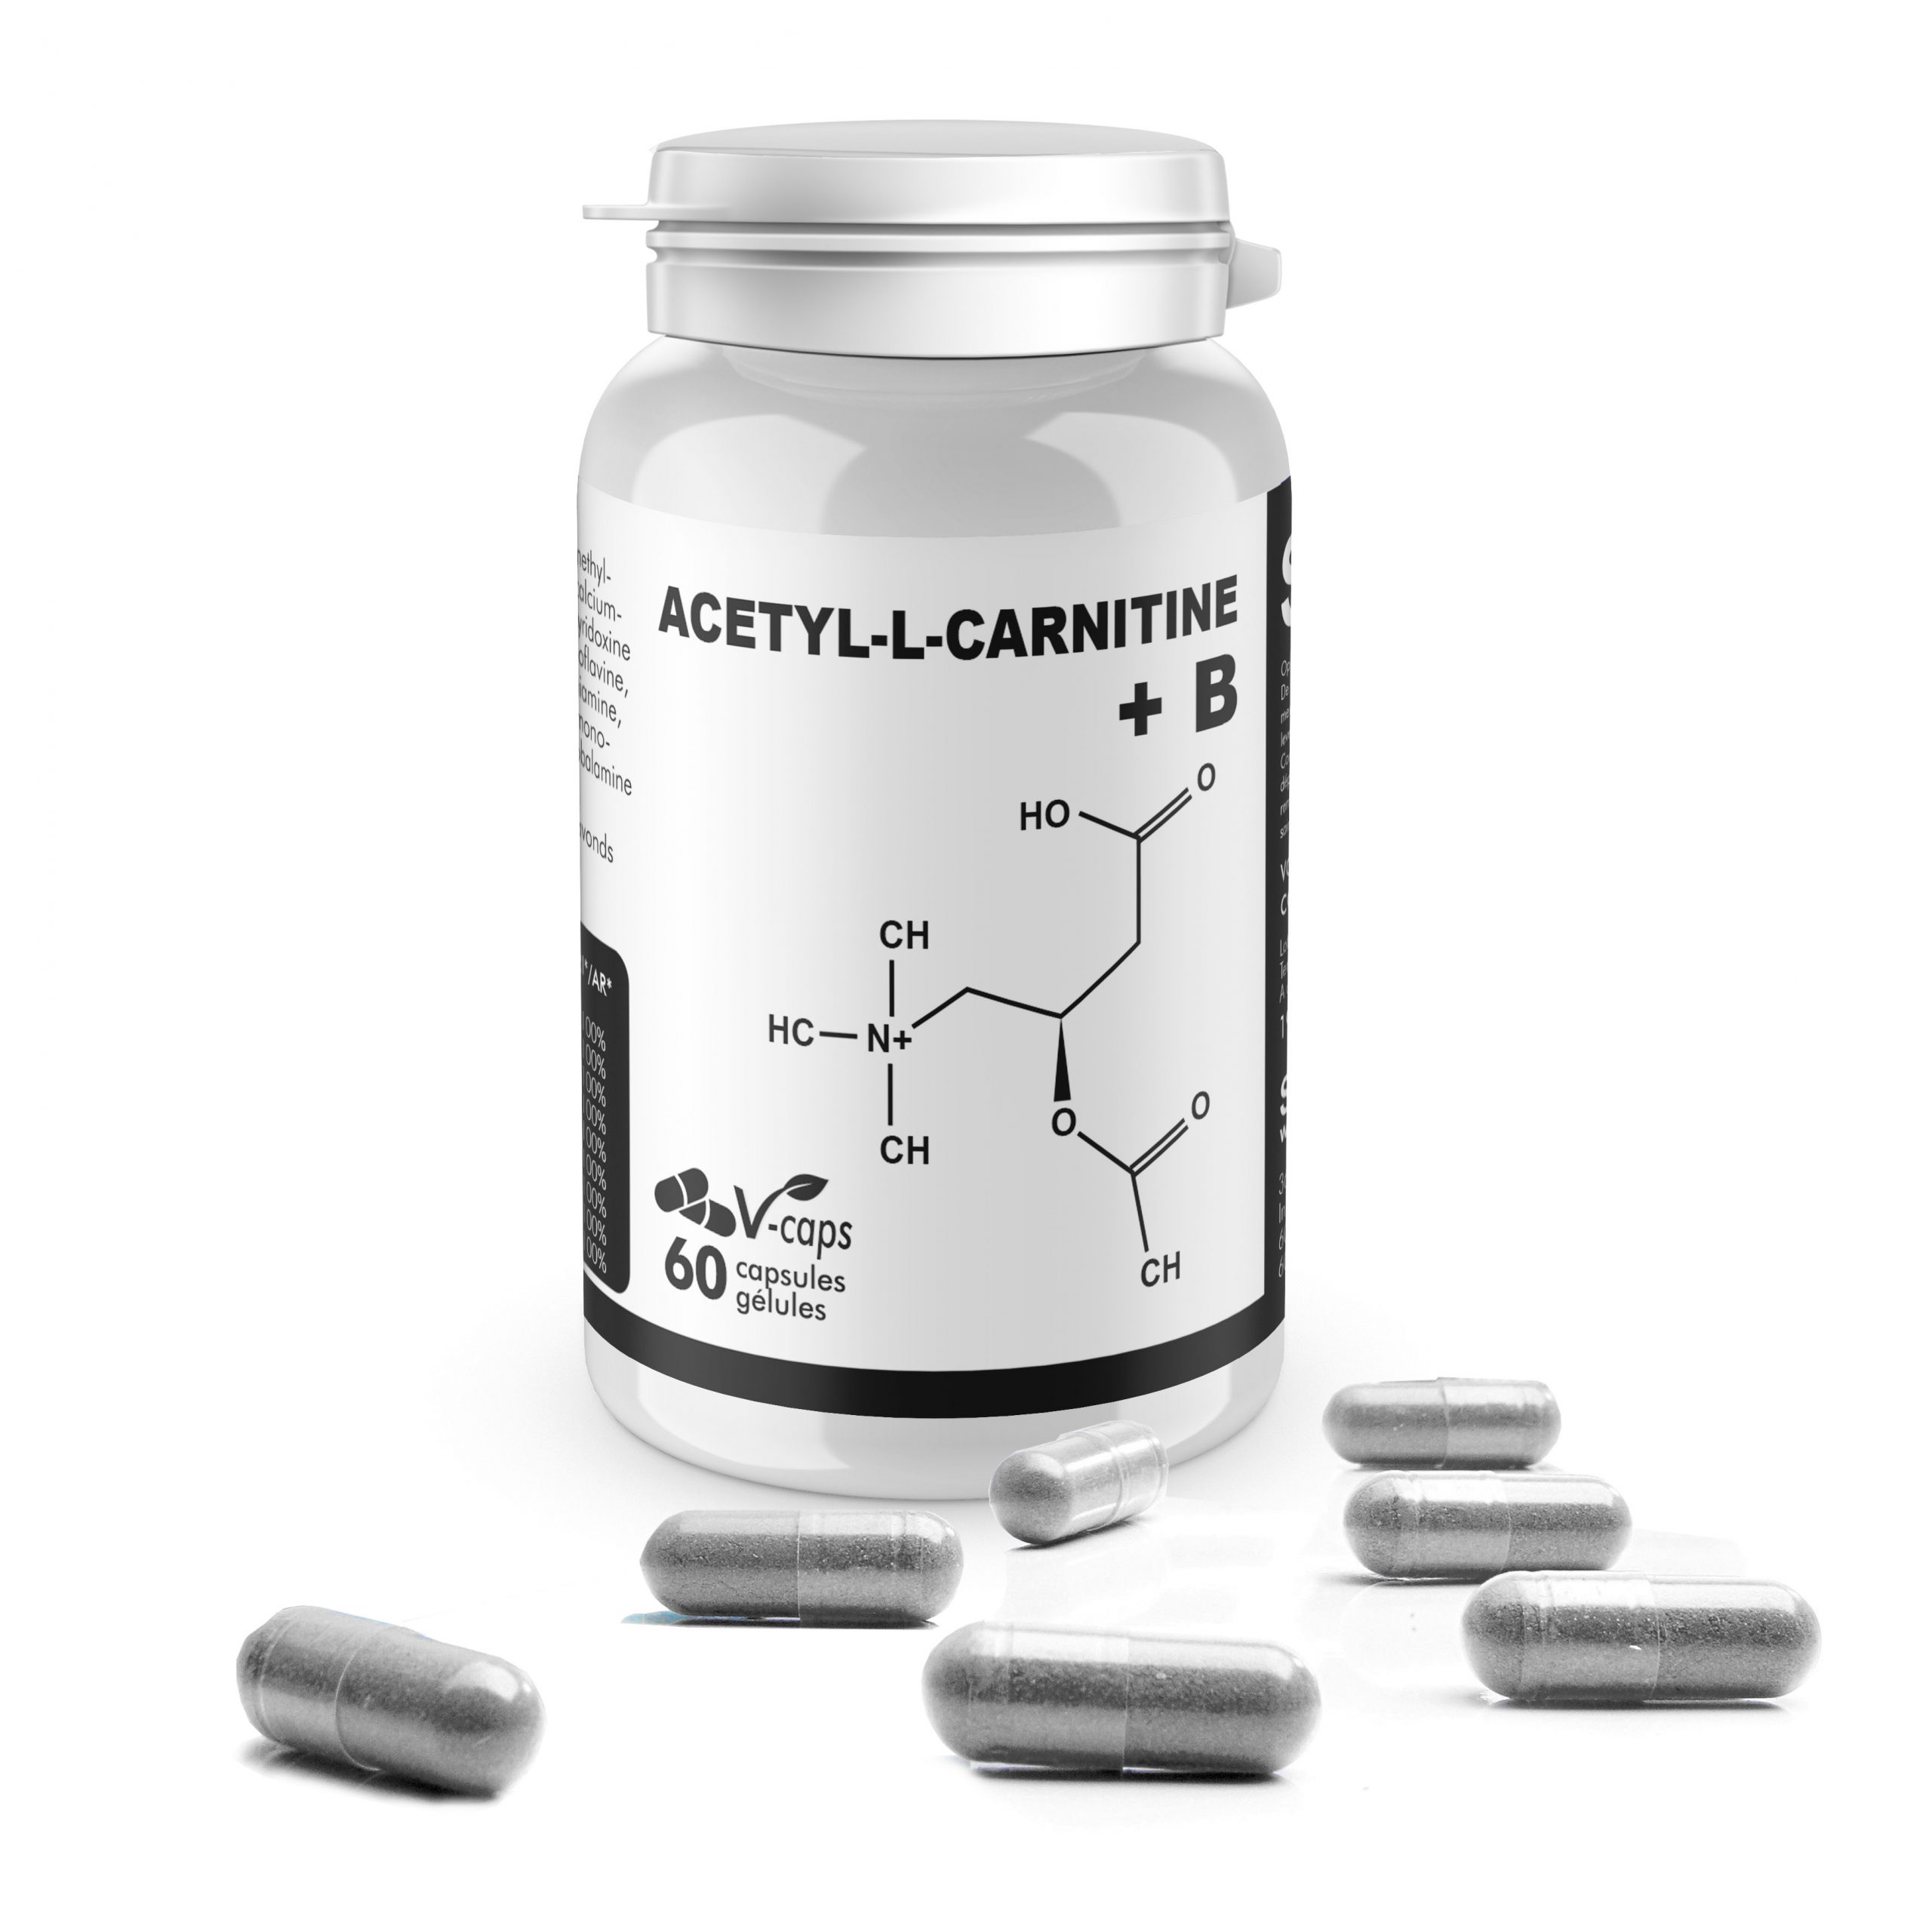 Acetyl-L-carnitine + B